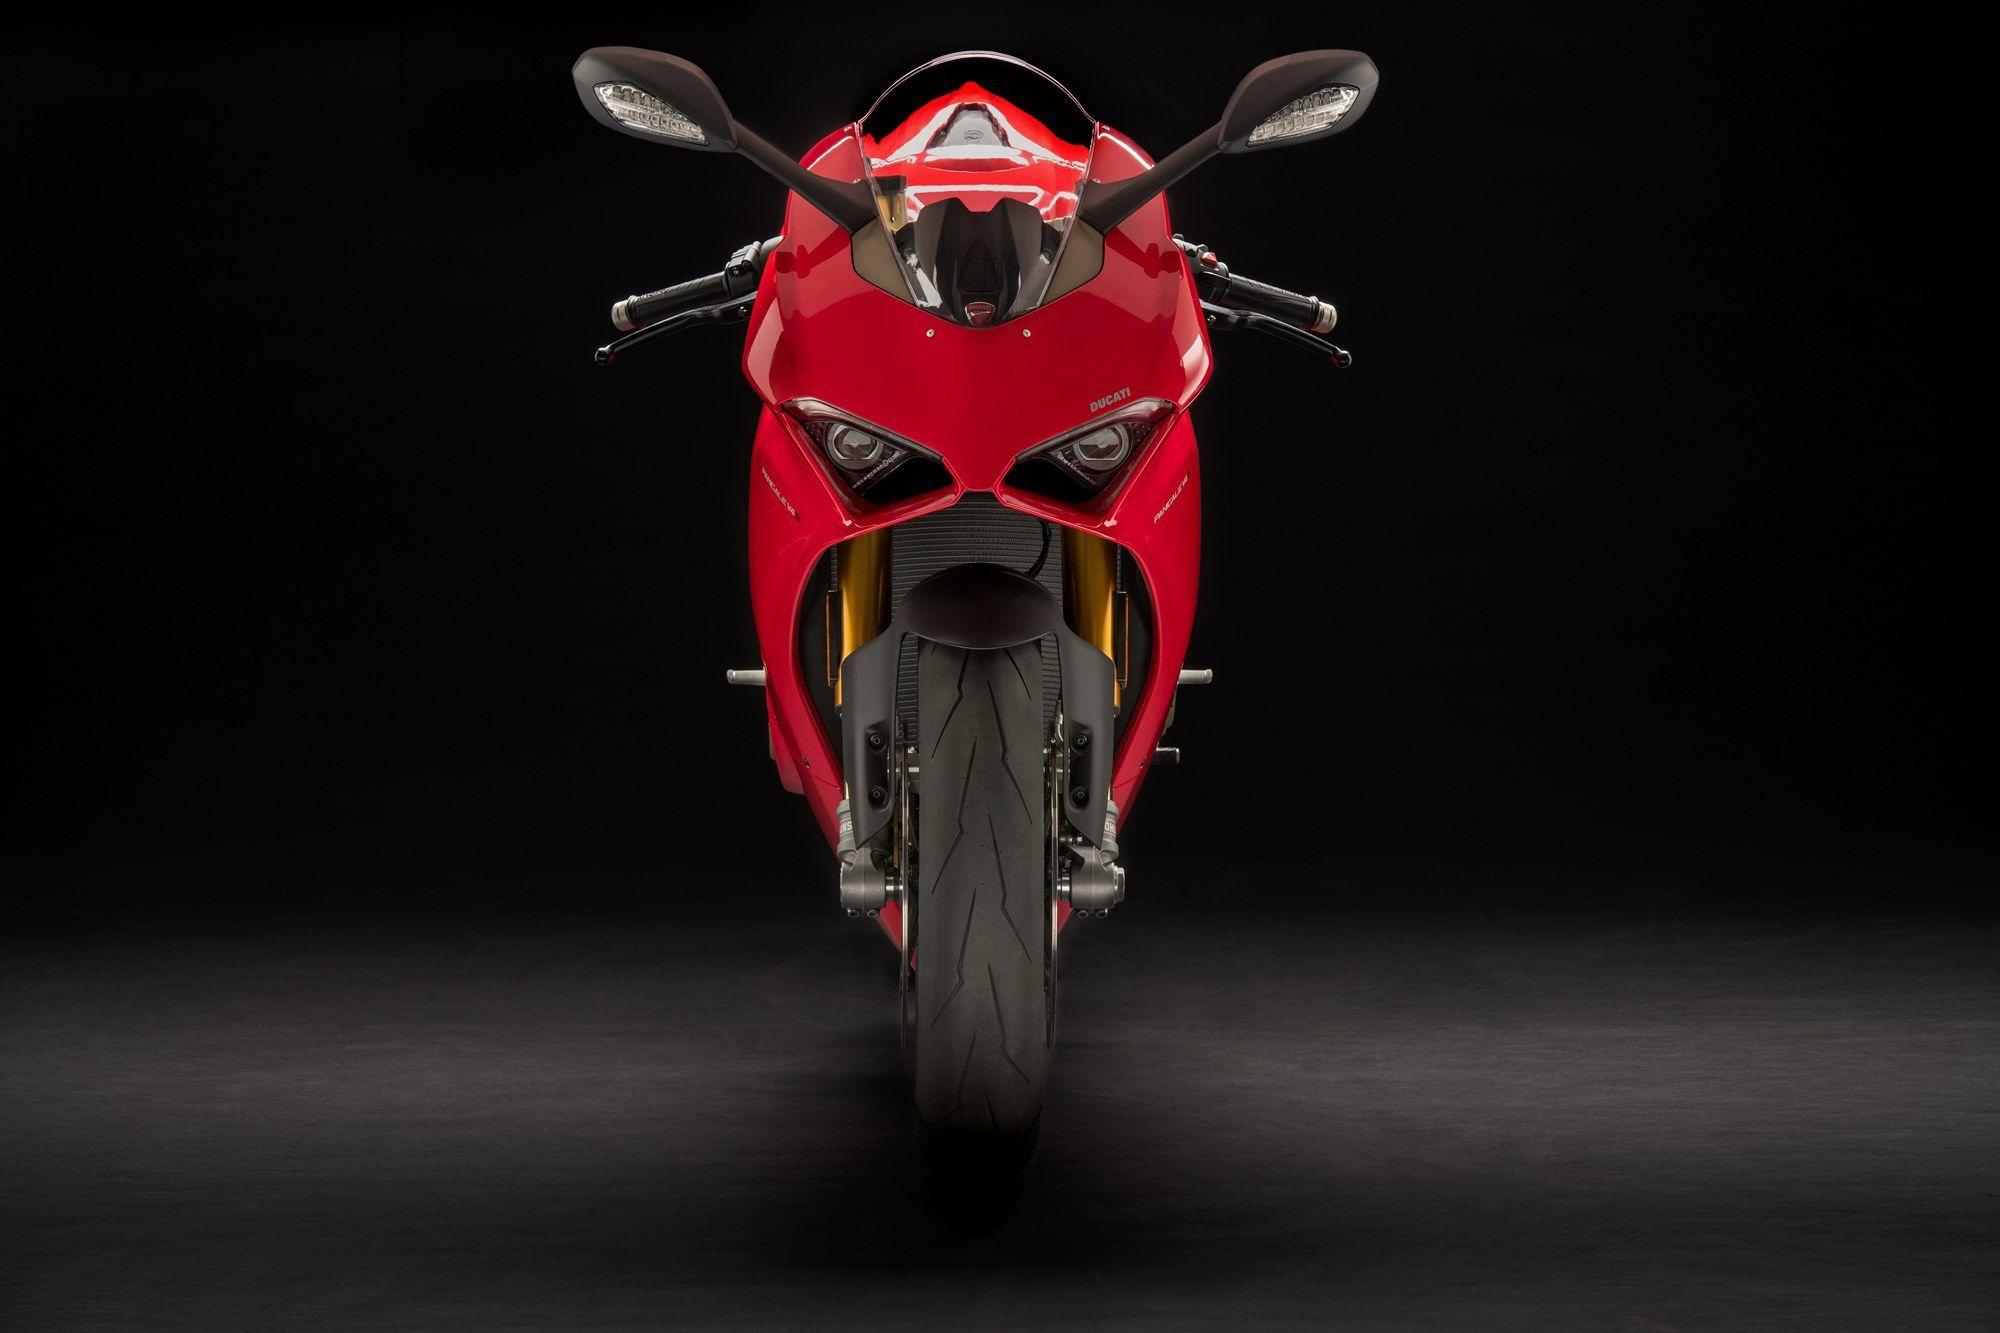 Ducati Panigale V4 S image